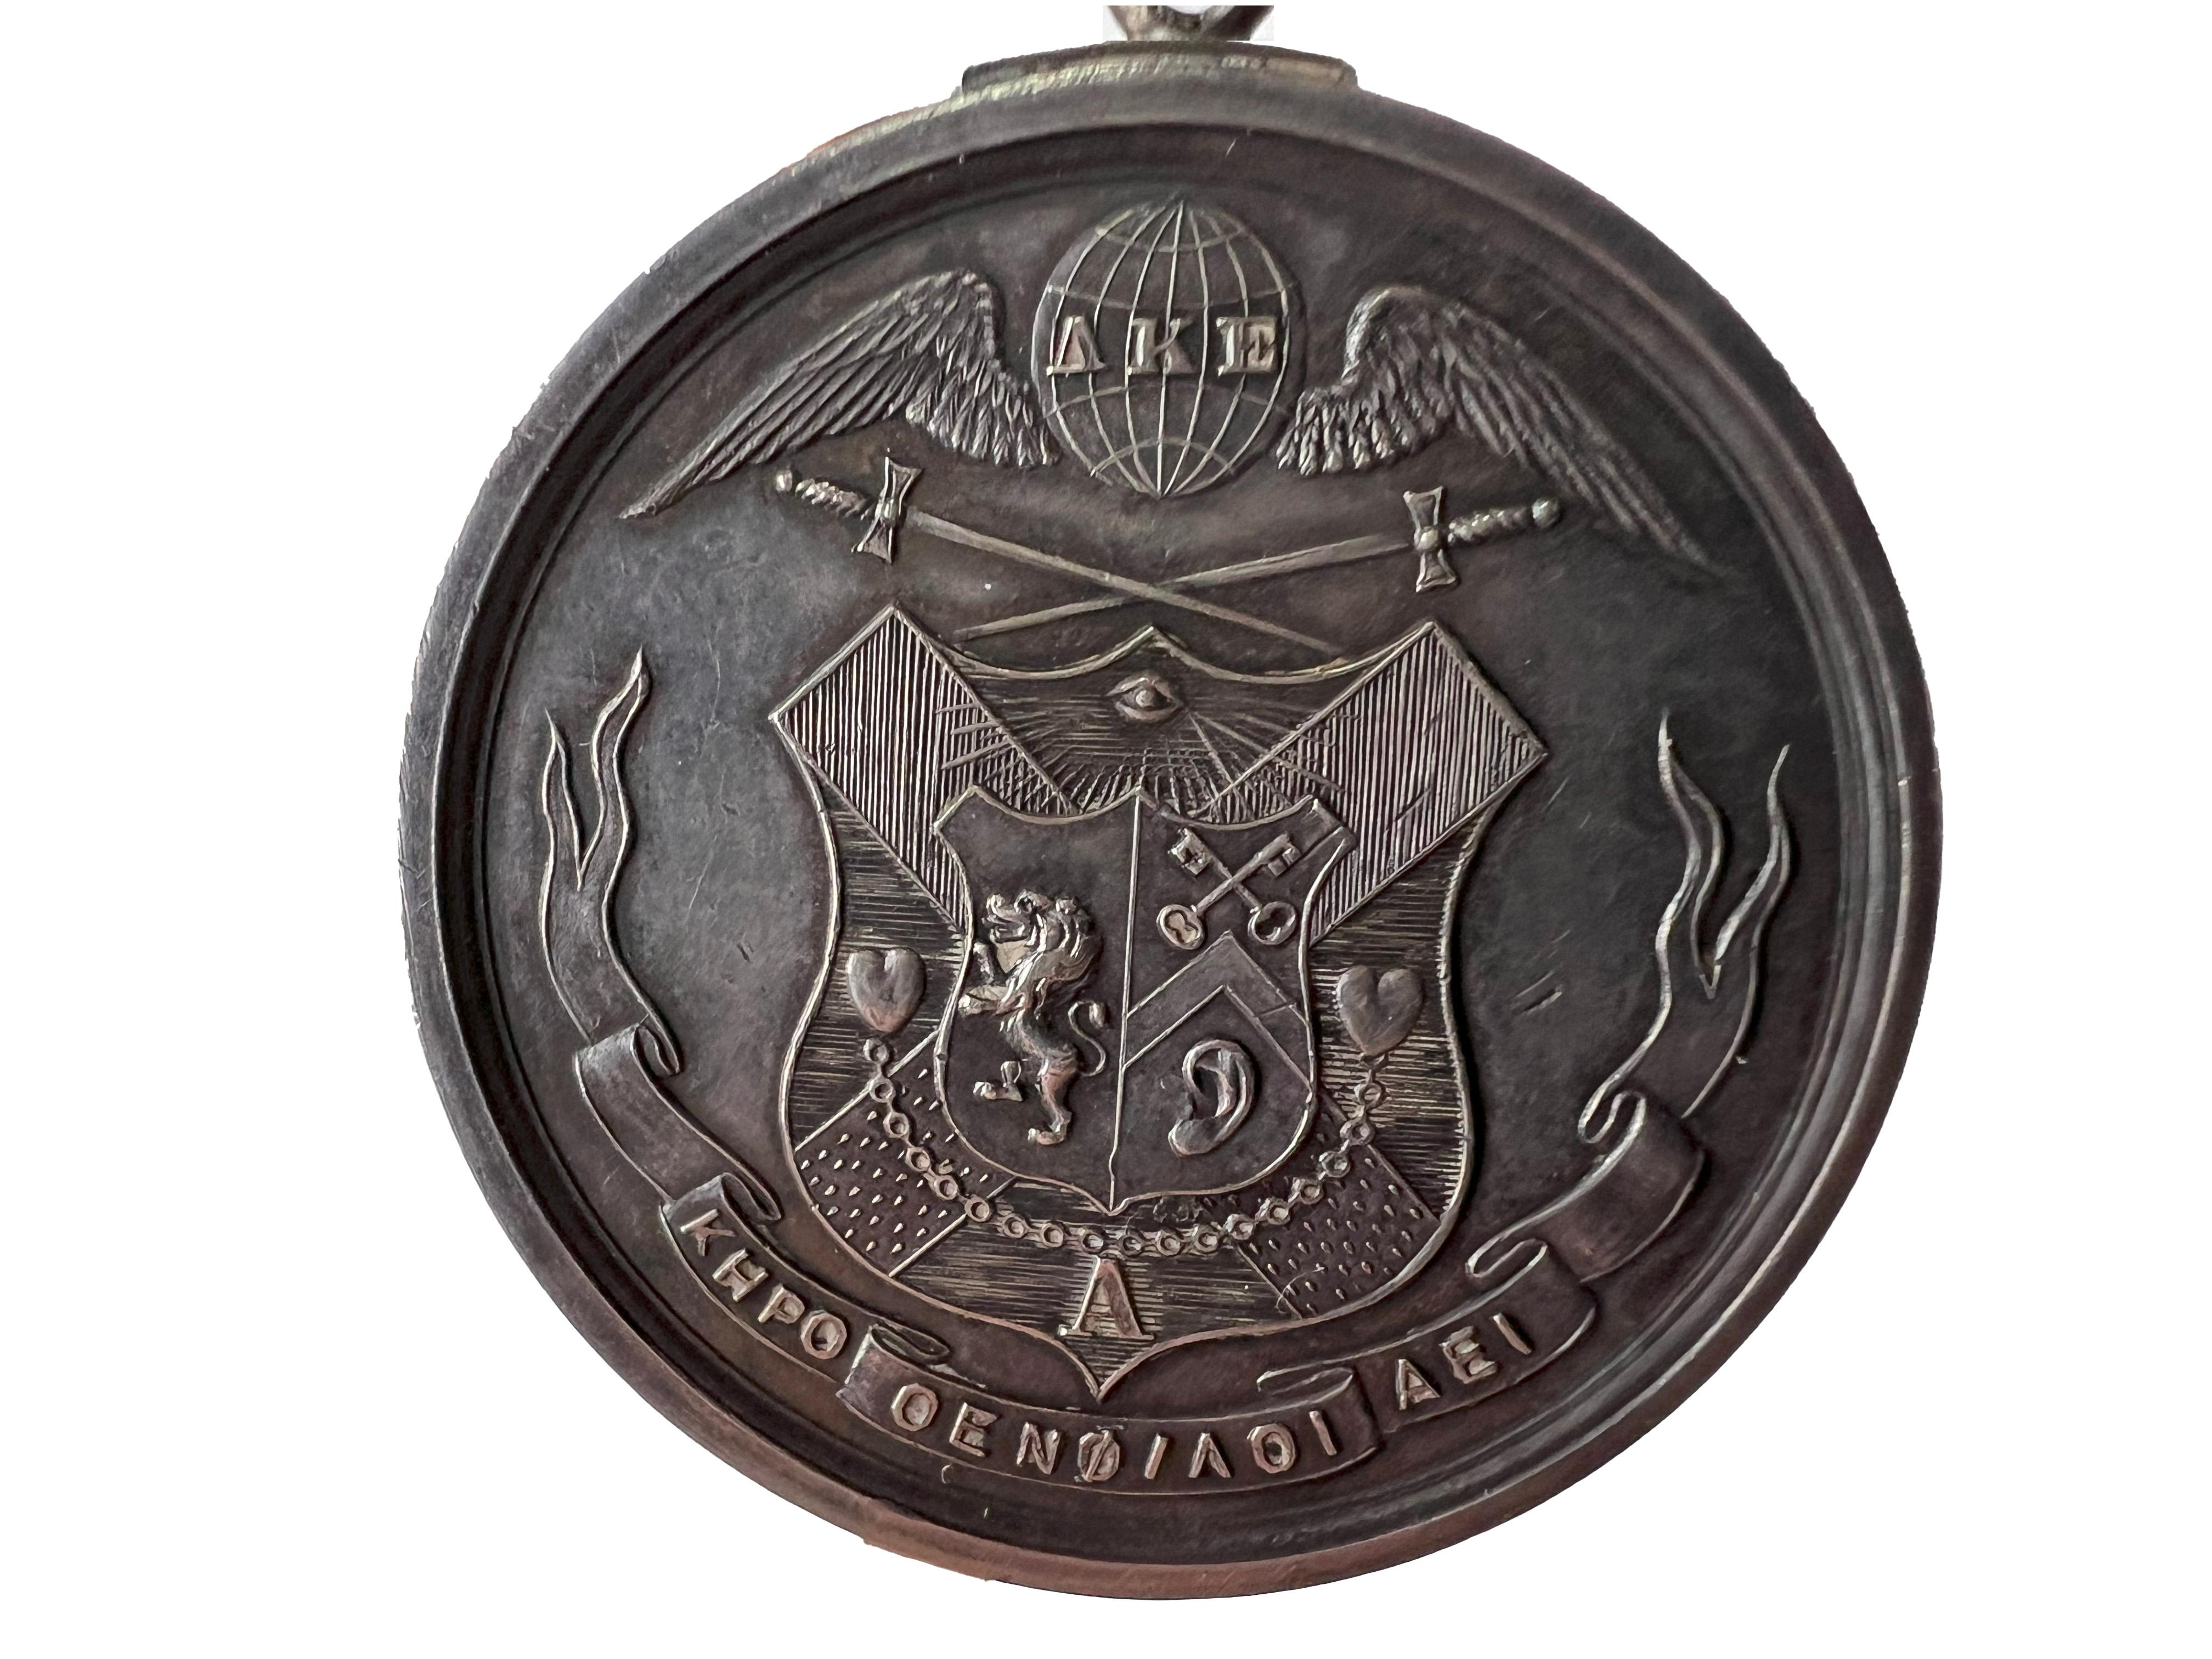  Harvard Fraternal Medallion - Delta Kappa Epsilon DKE 1877 Robert P. Hastings, Harvard  (Handgefertigt) im Angebot